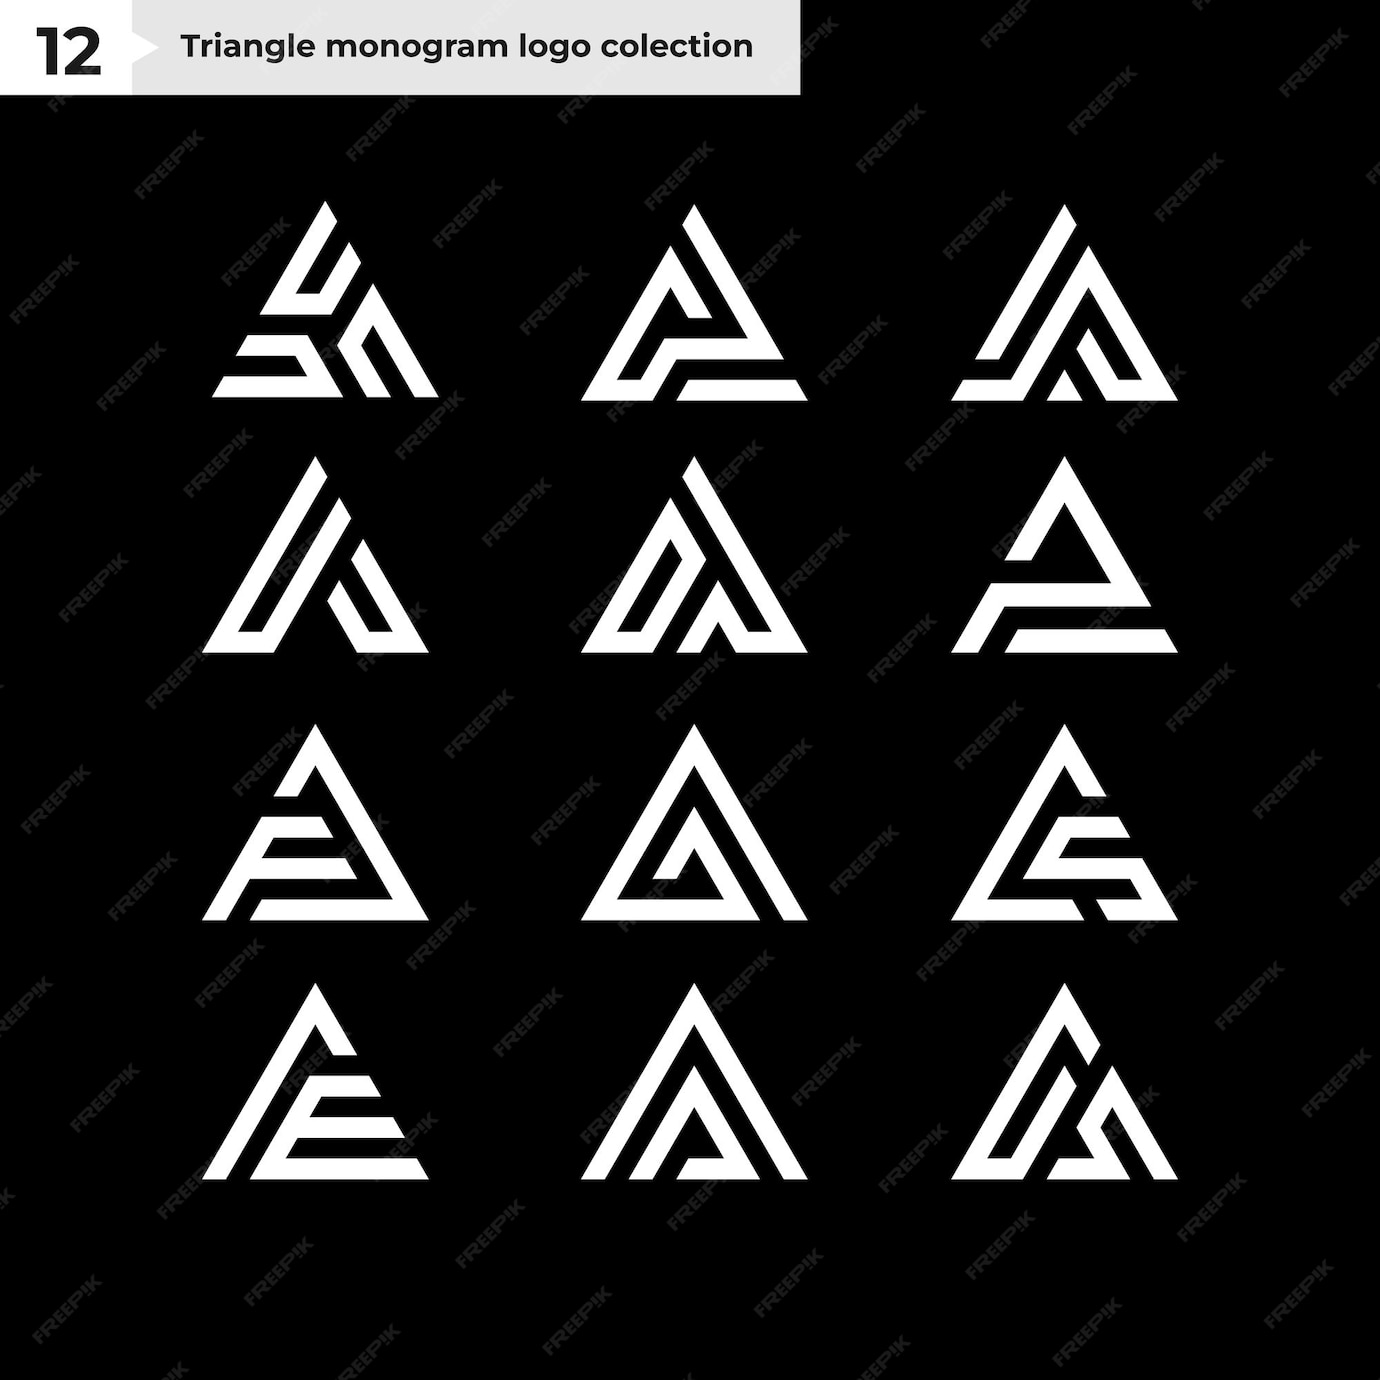 Premium Vector Triangle Monogram Logo Collection Concept